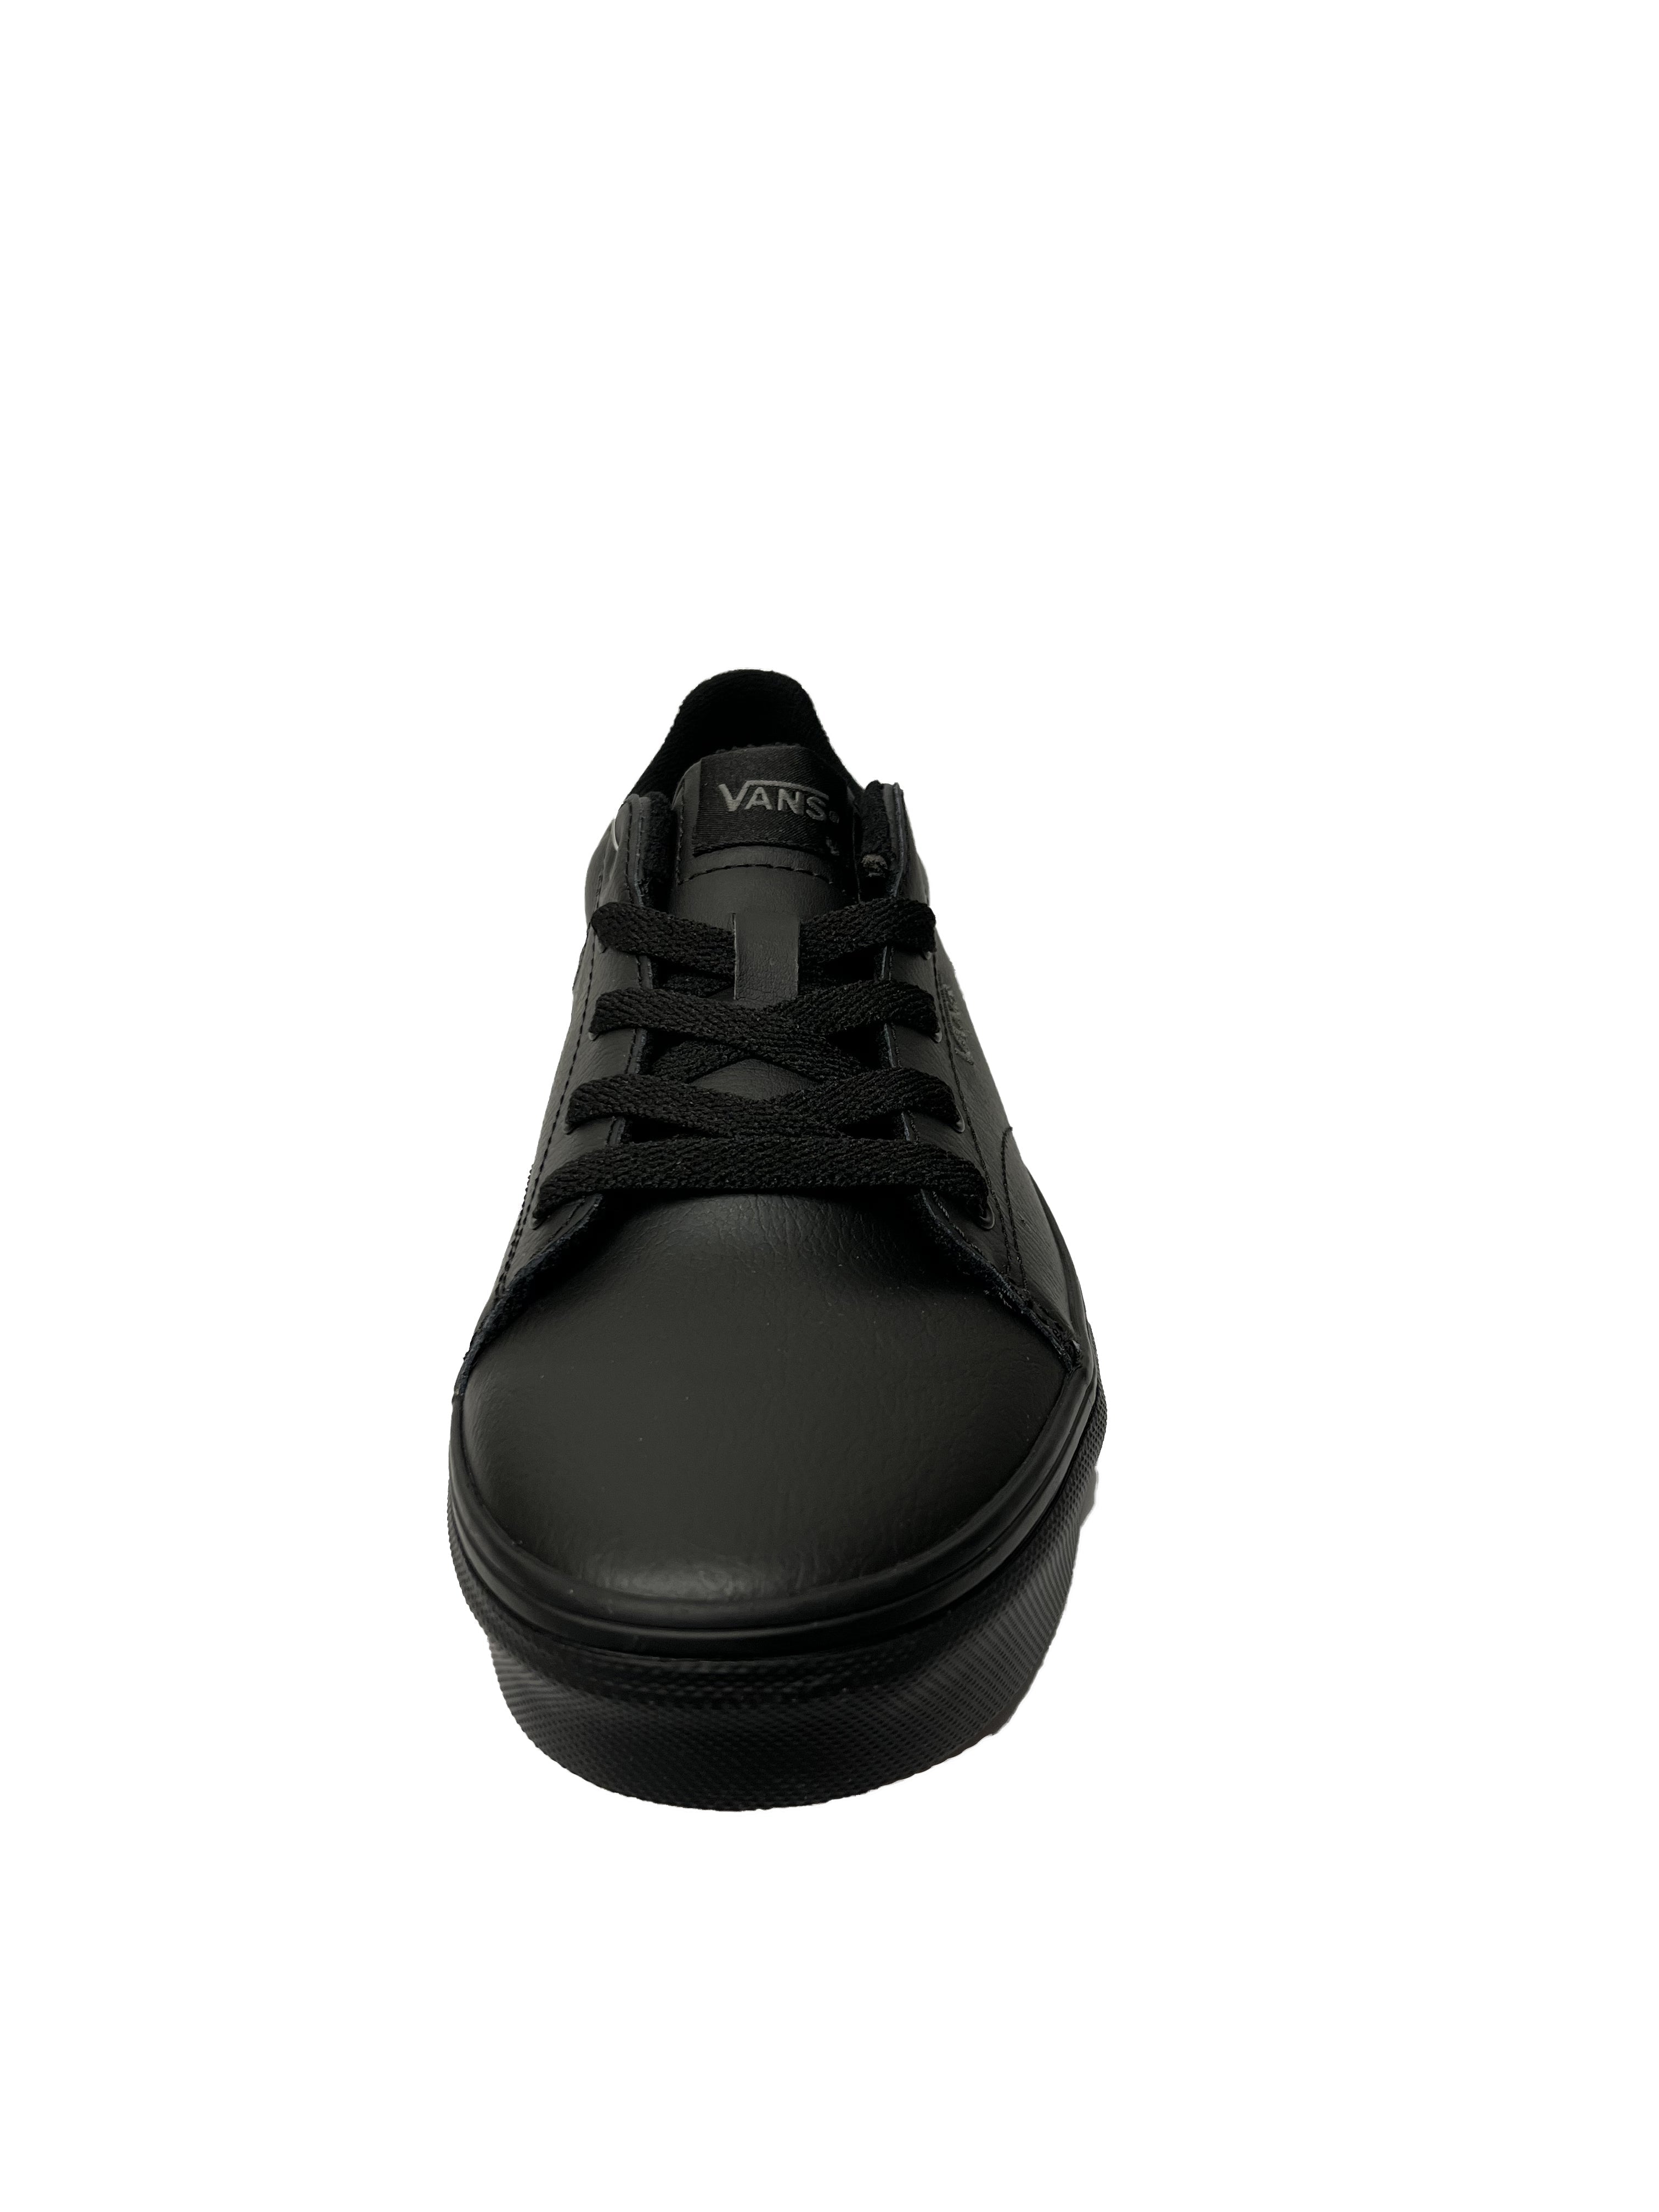 Vans Seldan Leather shoes